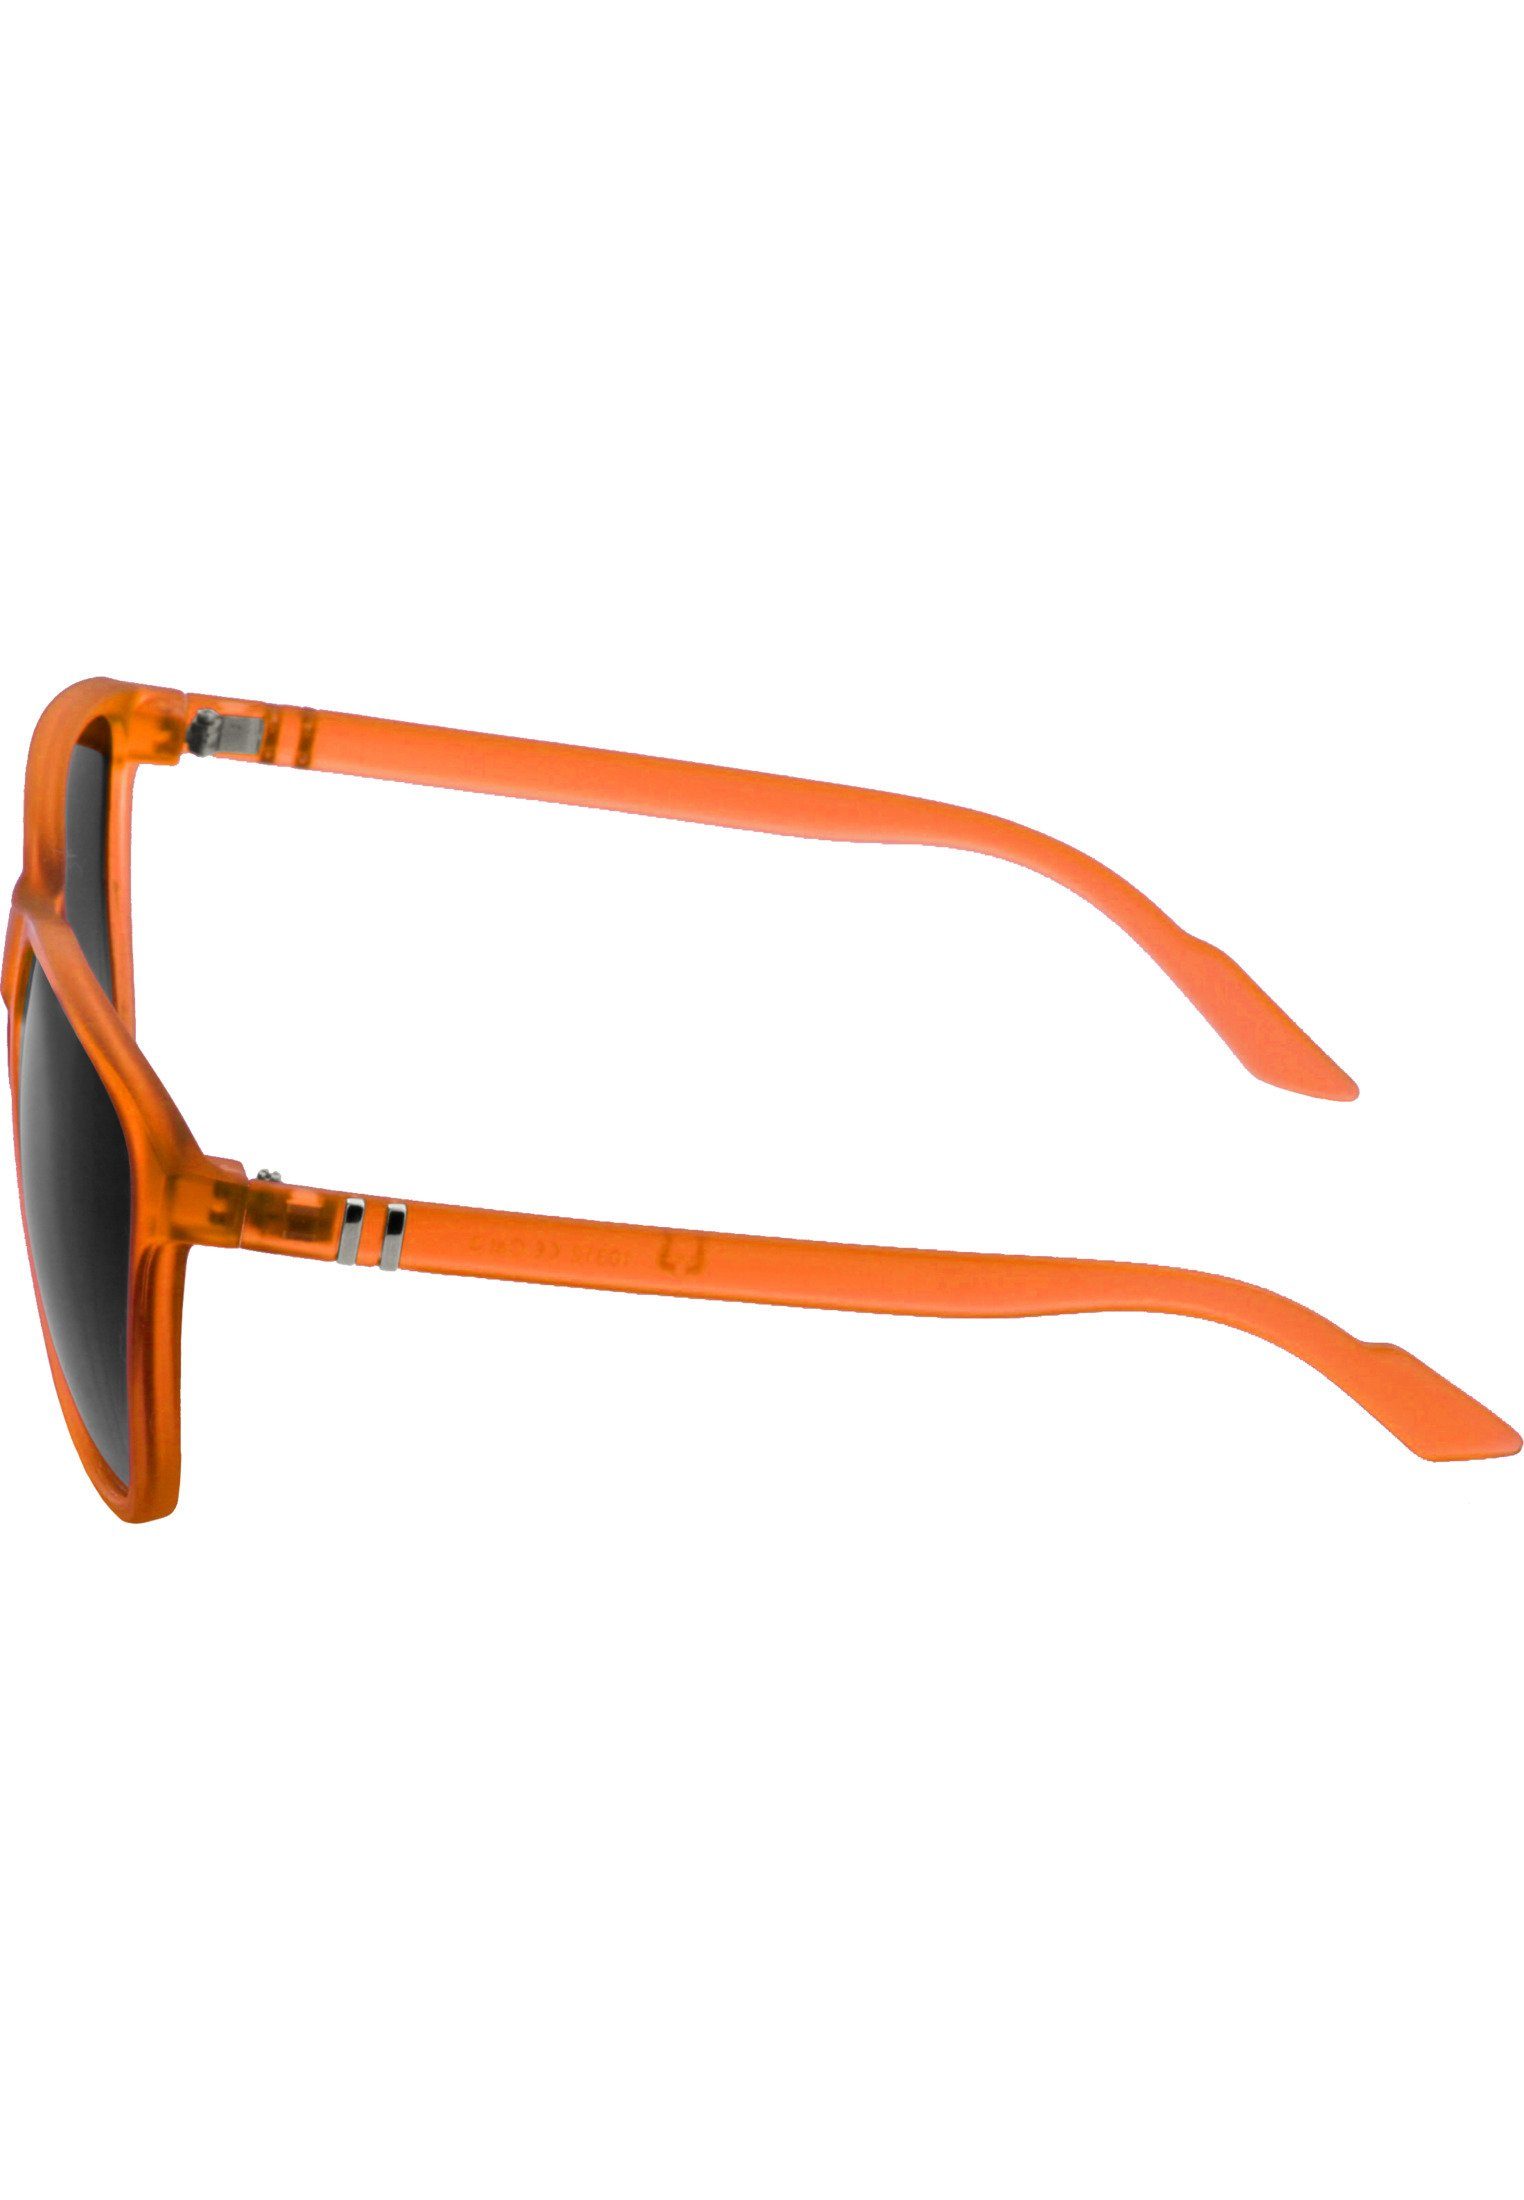 MSTRDS Sonnenbrille Accessoires Sunglasses neonorange Chirwa